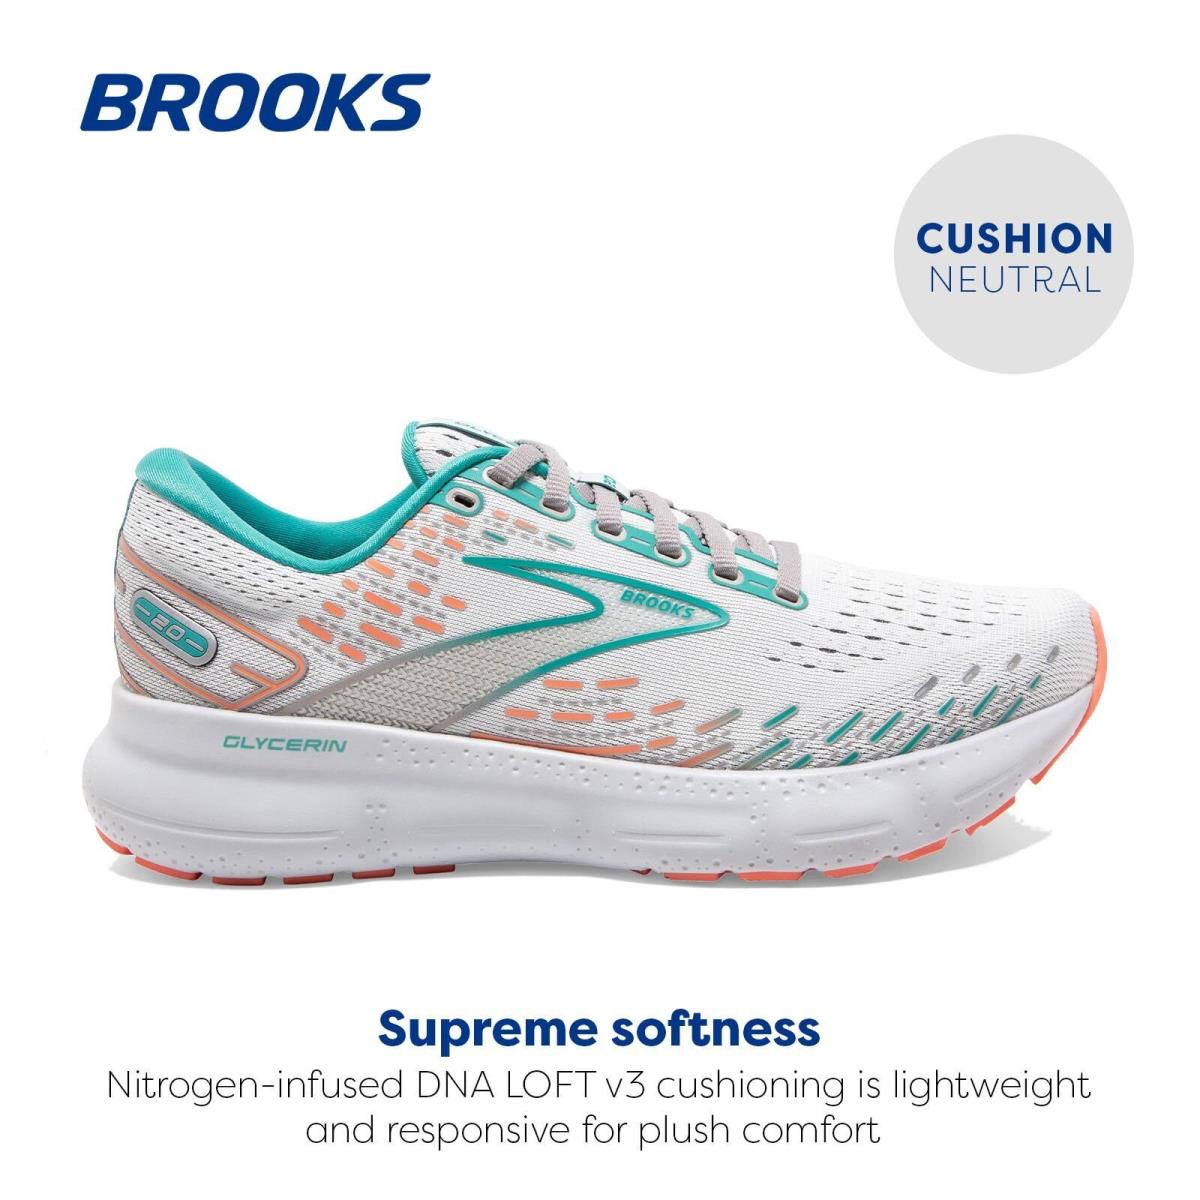 Brooks Women`s Glycerin 20 Running Shoe Oyster/latigo Bay/coral 6.5 Medium US - Oyster/Latigo Bay/Coral